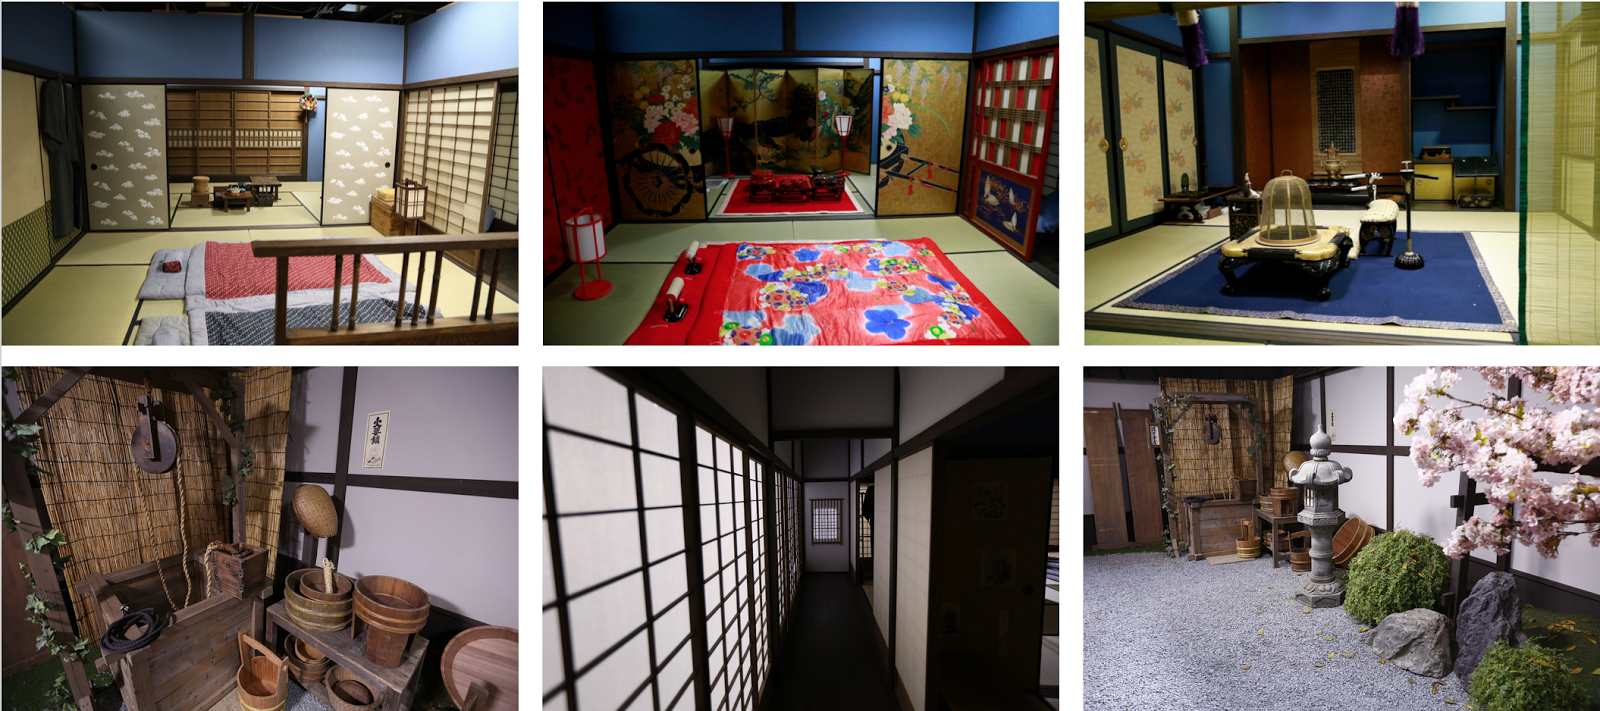 youtube space tokyo studio set samurai drama period jidaigeki toei roppongi hills youtuber